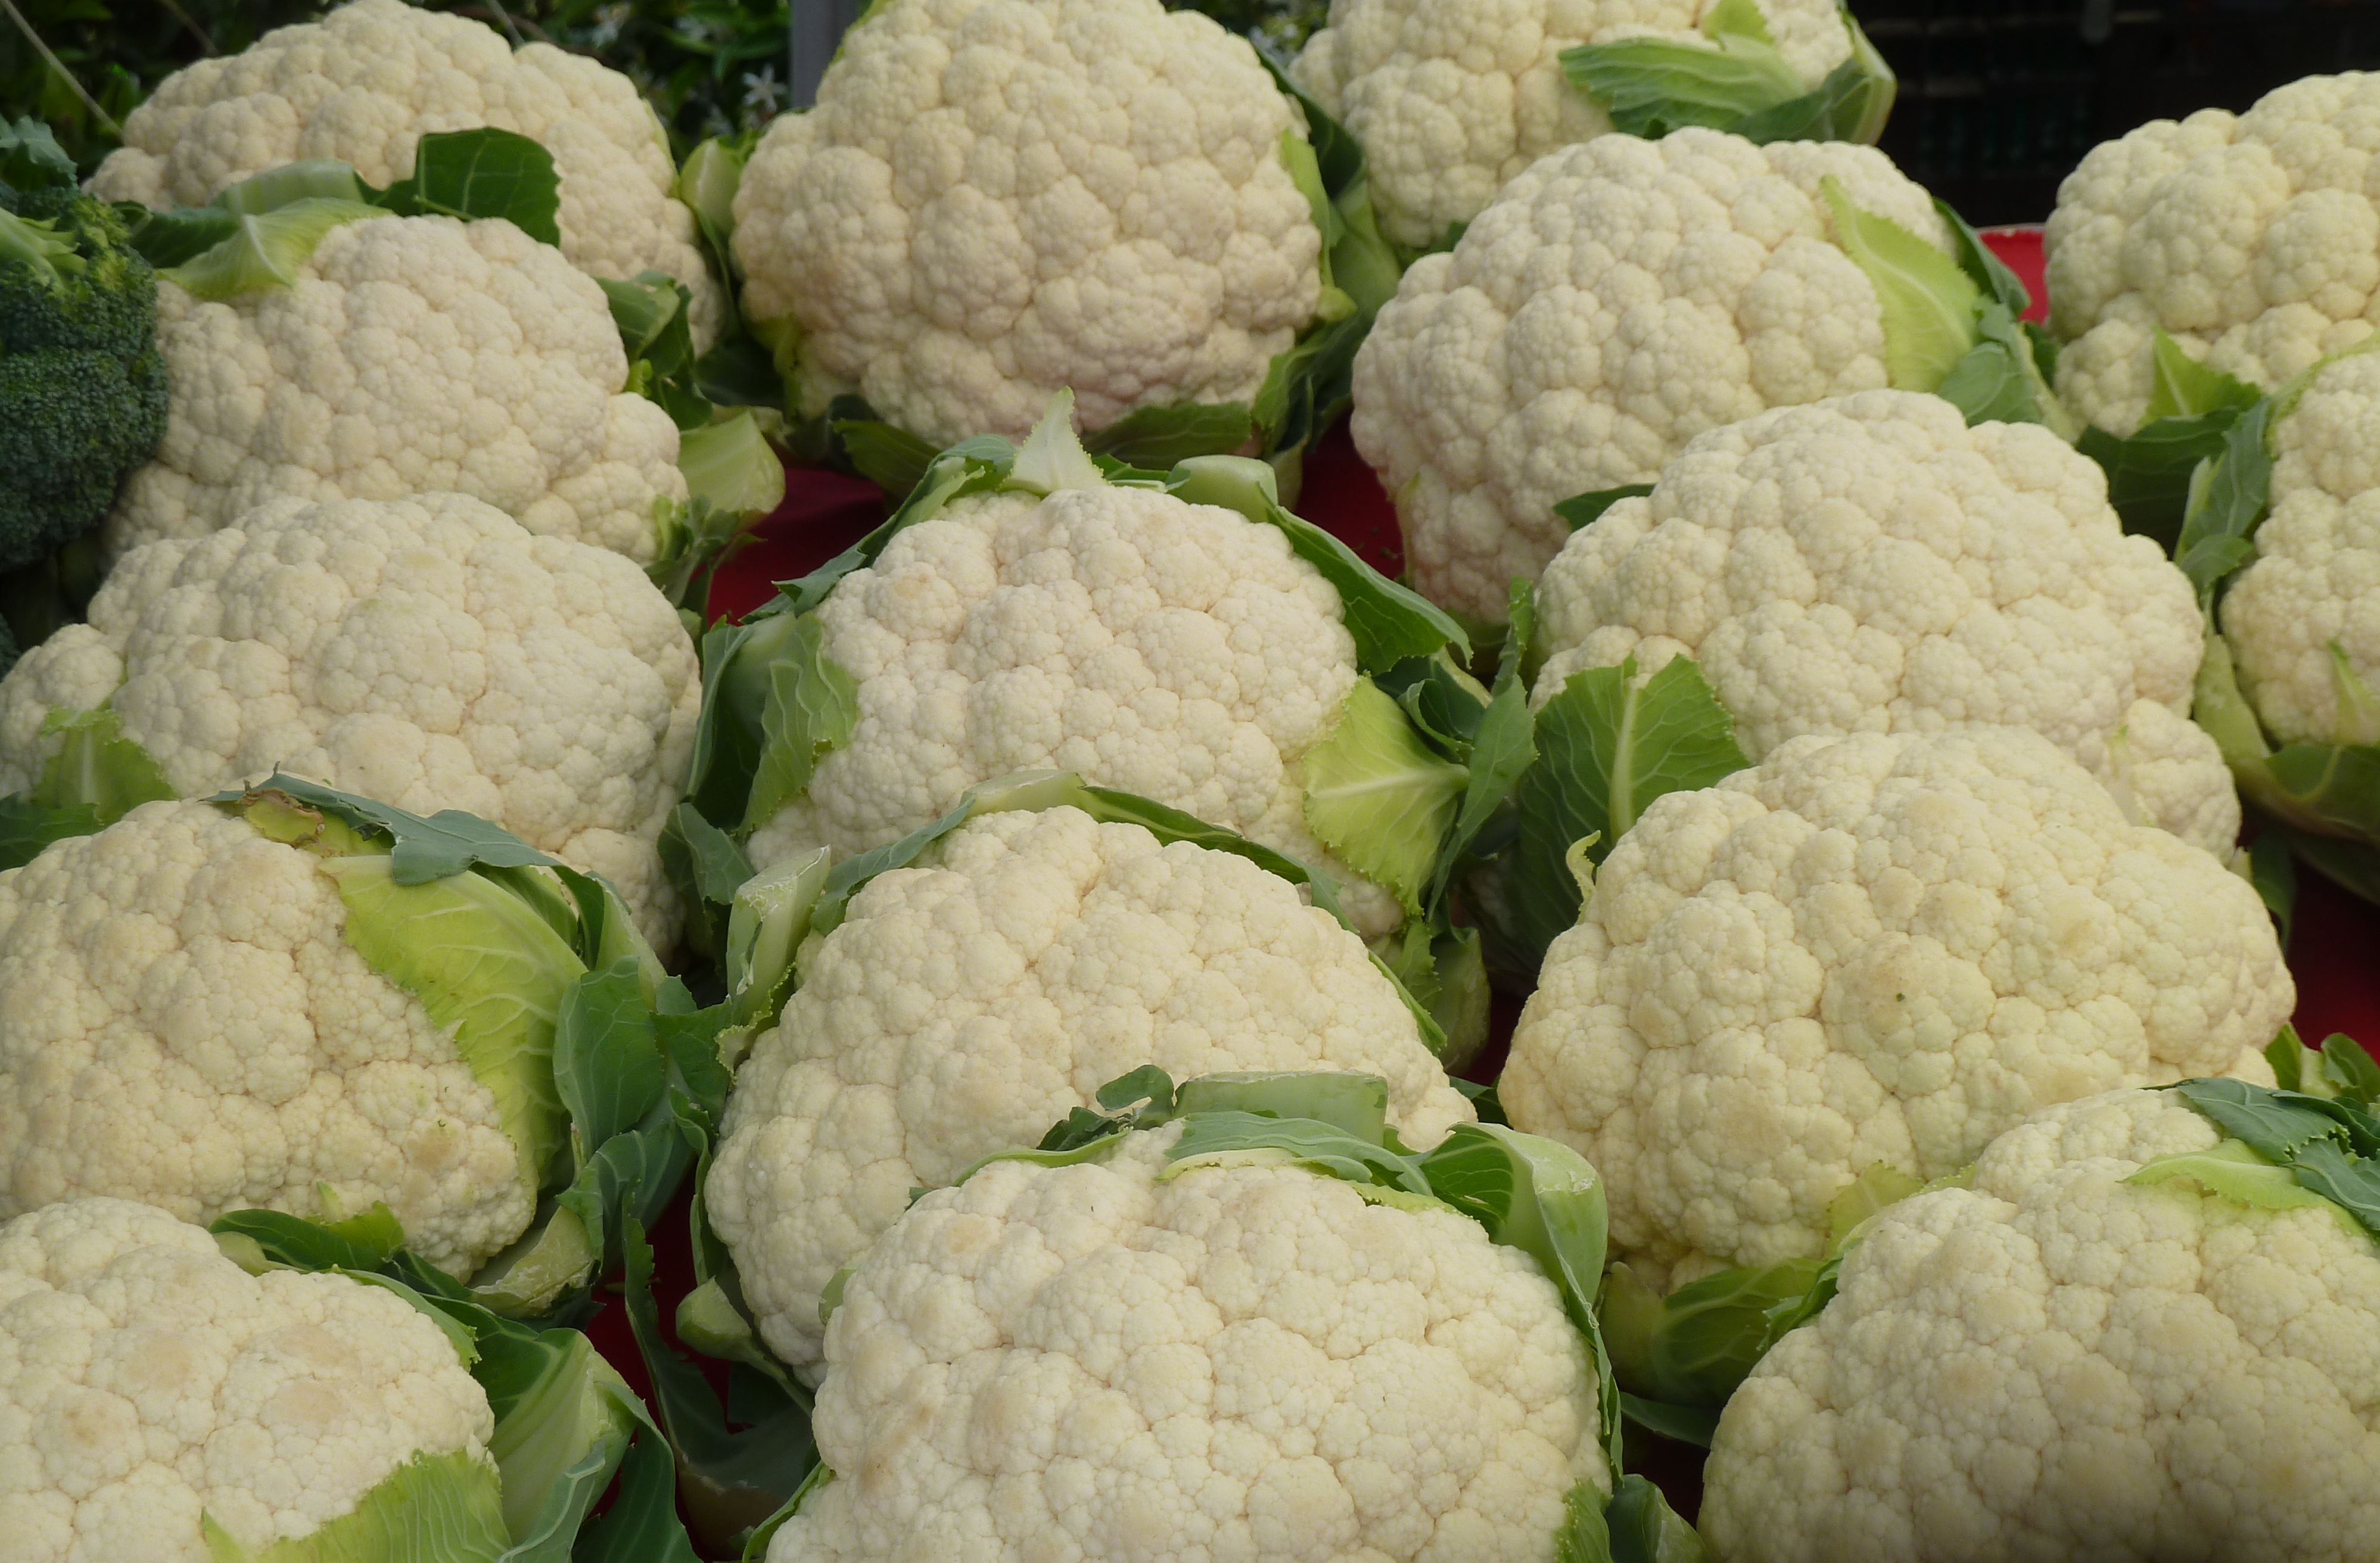 Farmer grows single cauliflower weighing 14.5 kilos